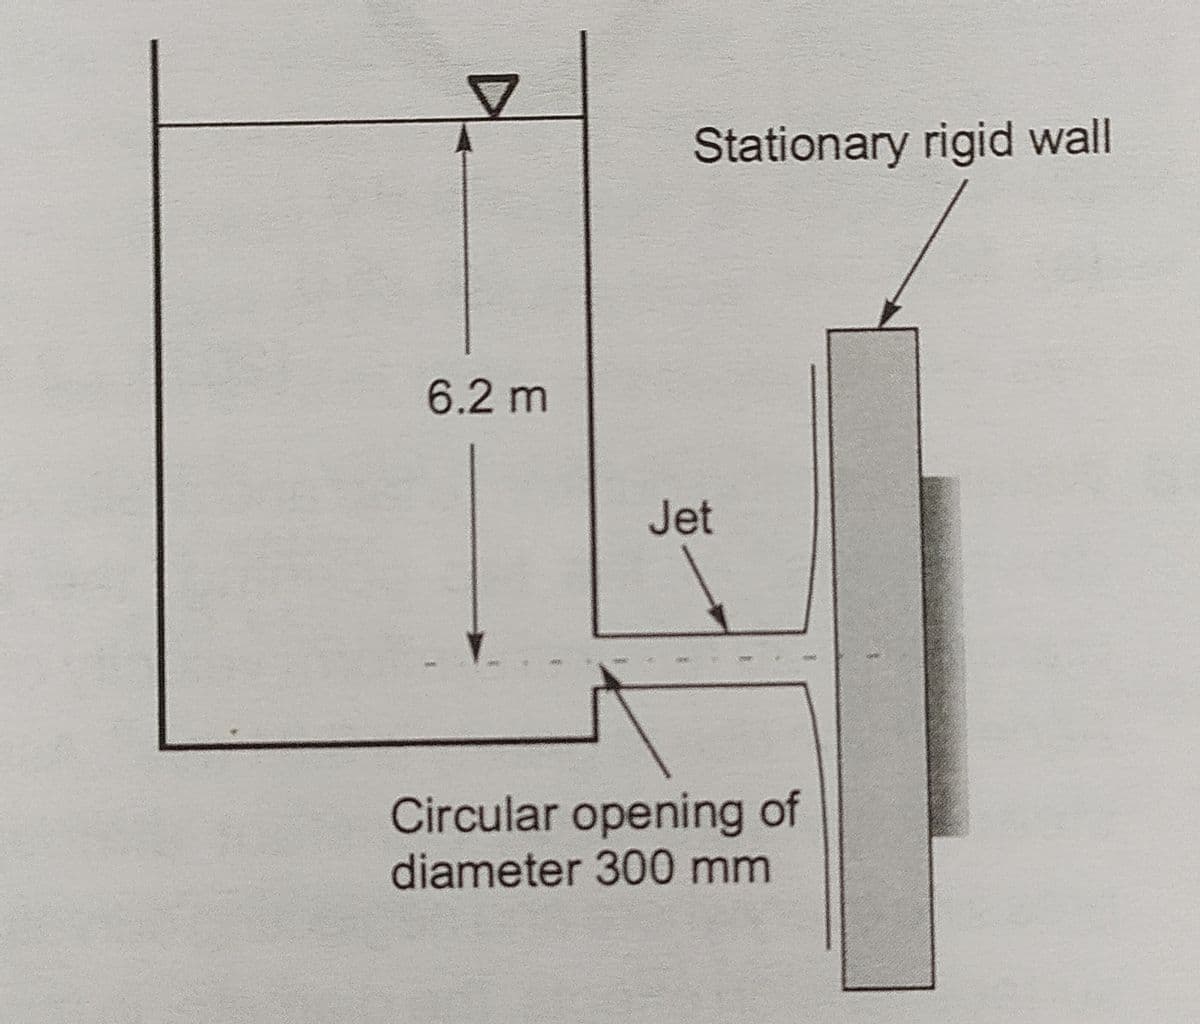 Stationary rigid wall
6.2 m
Jet
Circular opening of
diameter 300 mm
